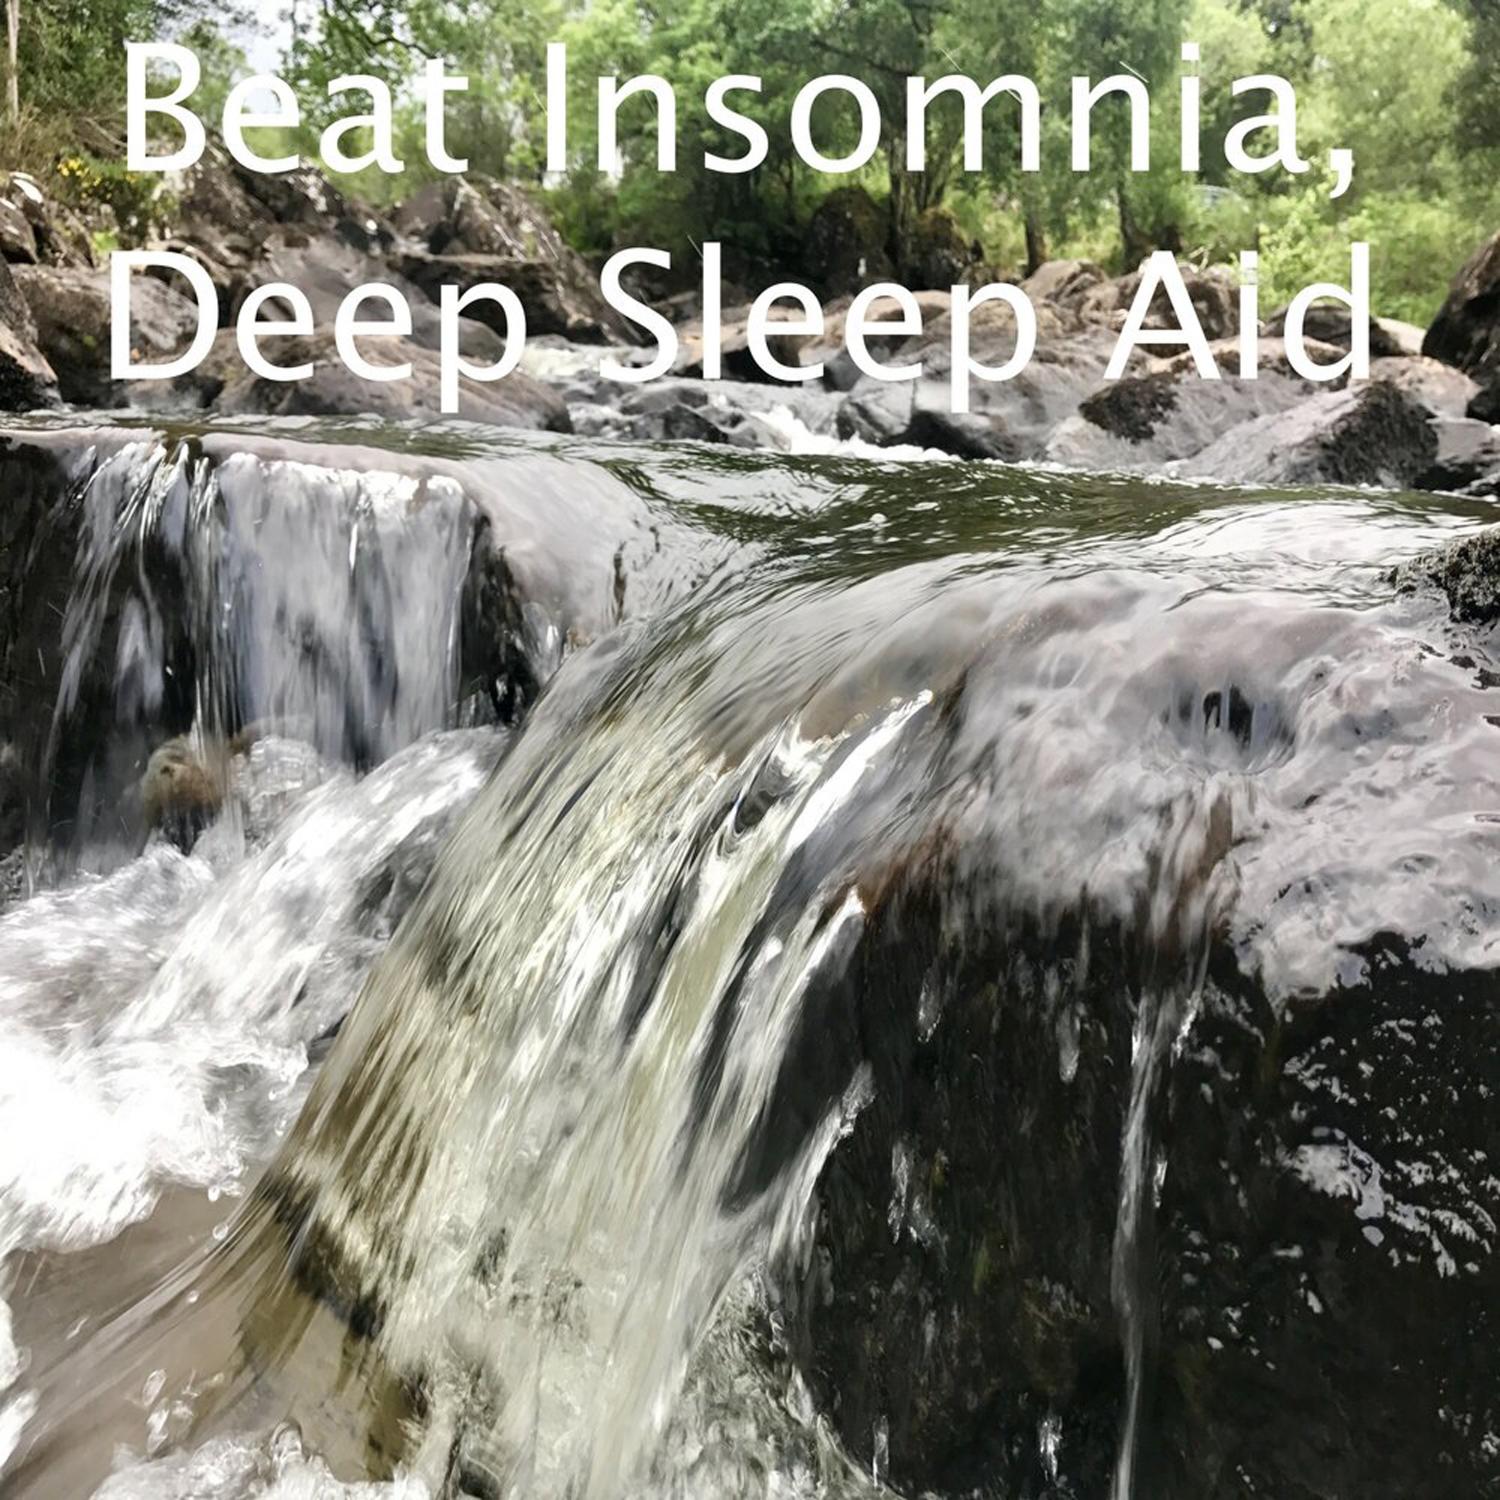 18 Tracks for Tinnitus: Beat Insomnia, Tinnitus, White Noise, Pink Noise, Rain Sounds for Sleep